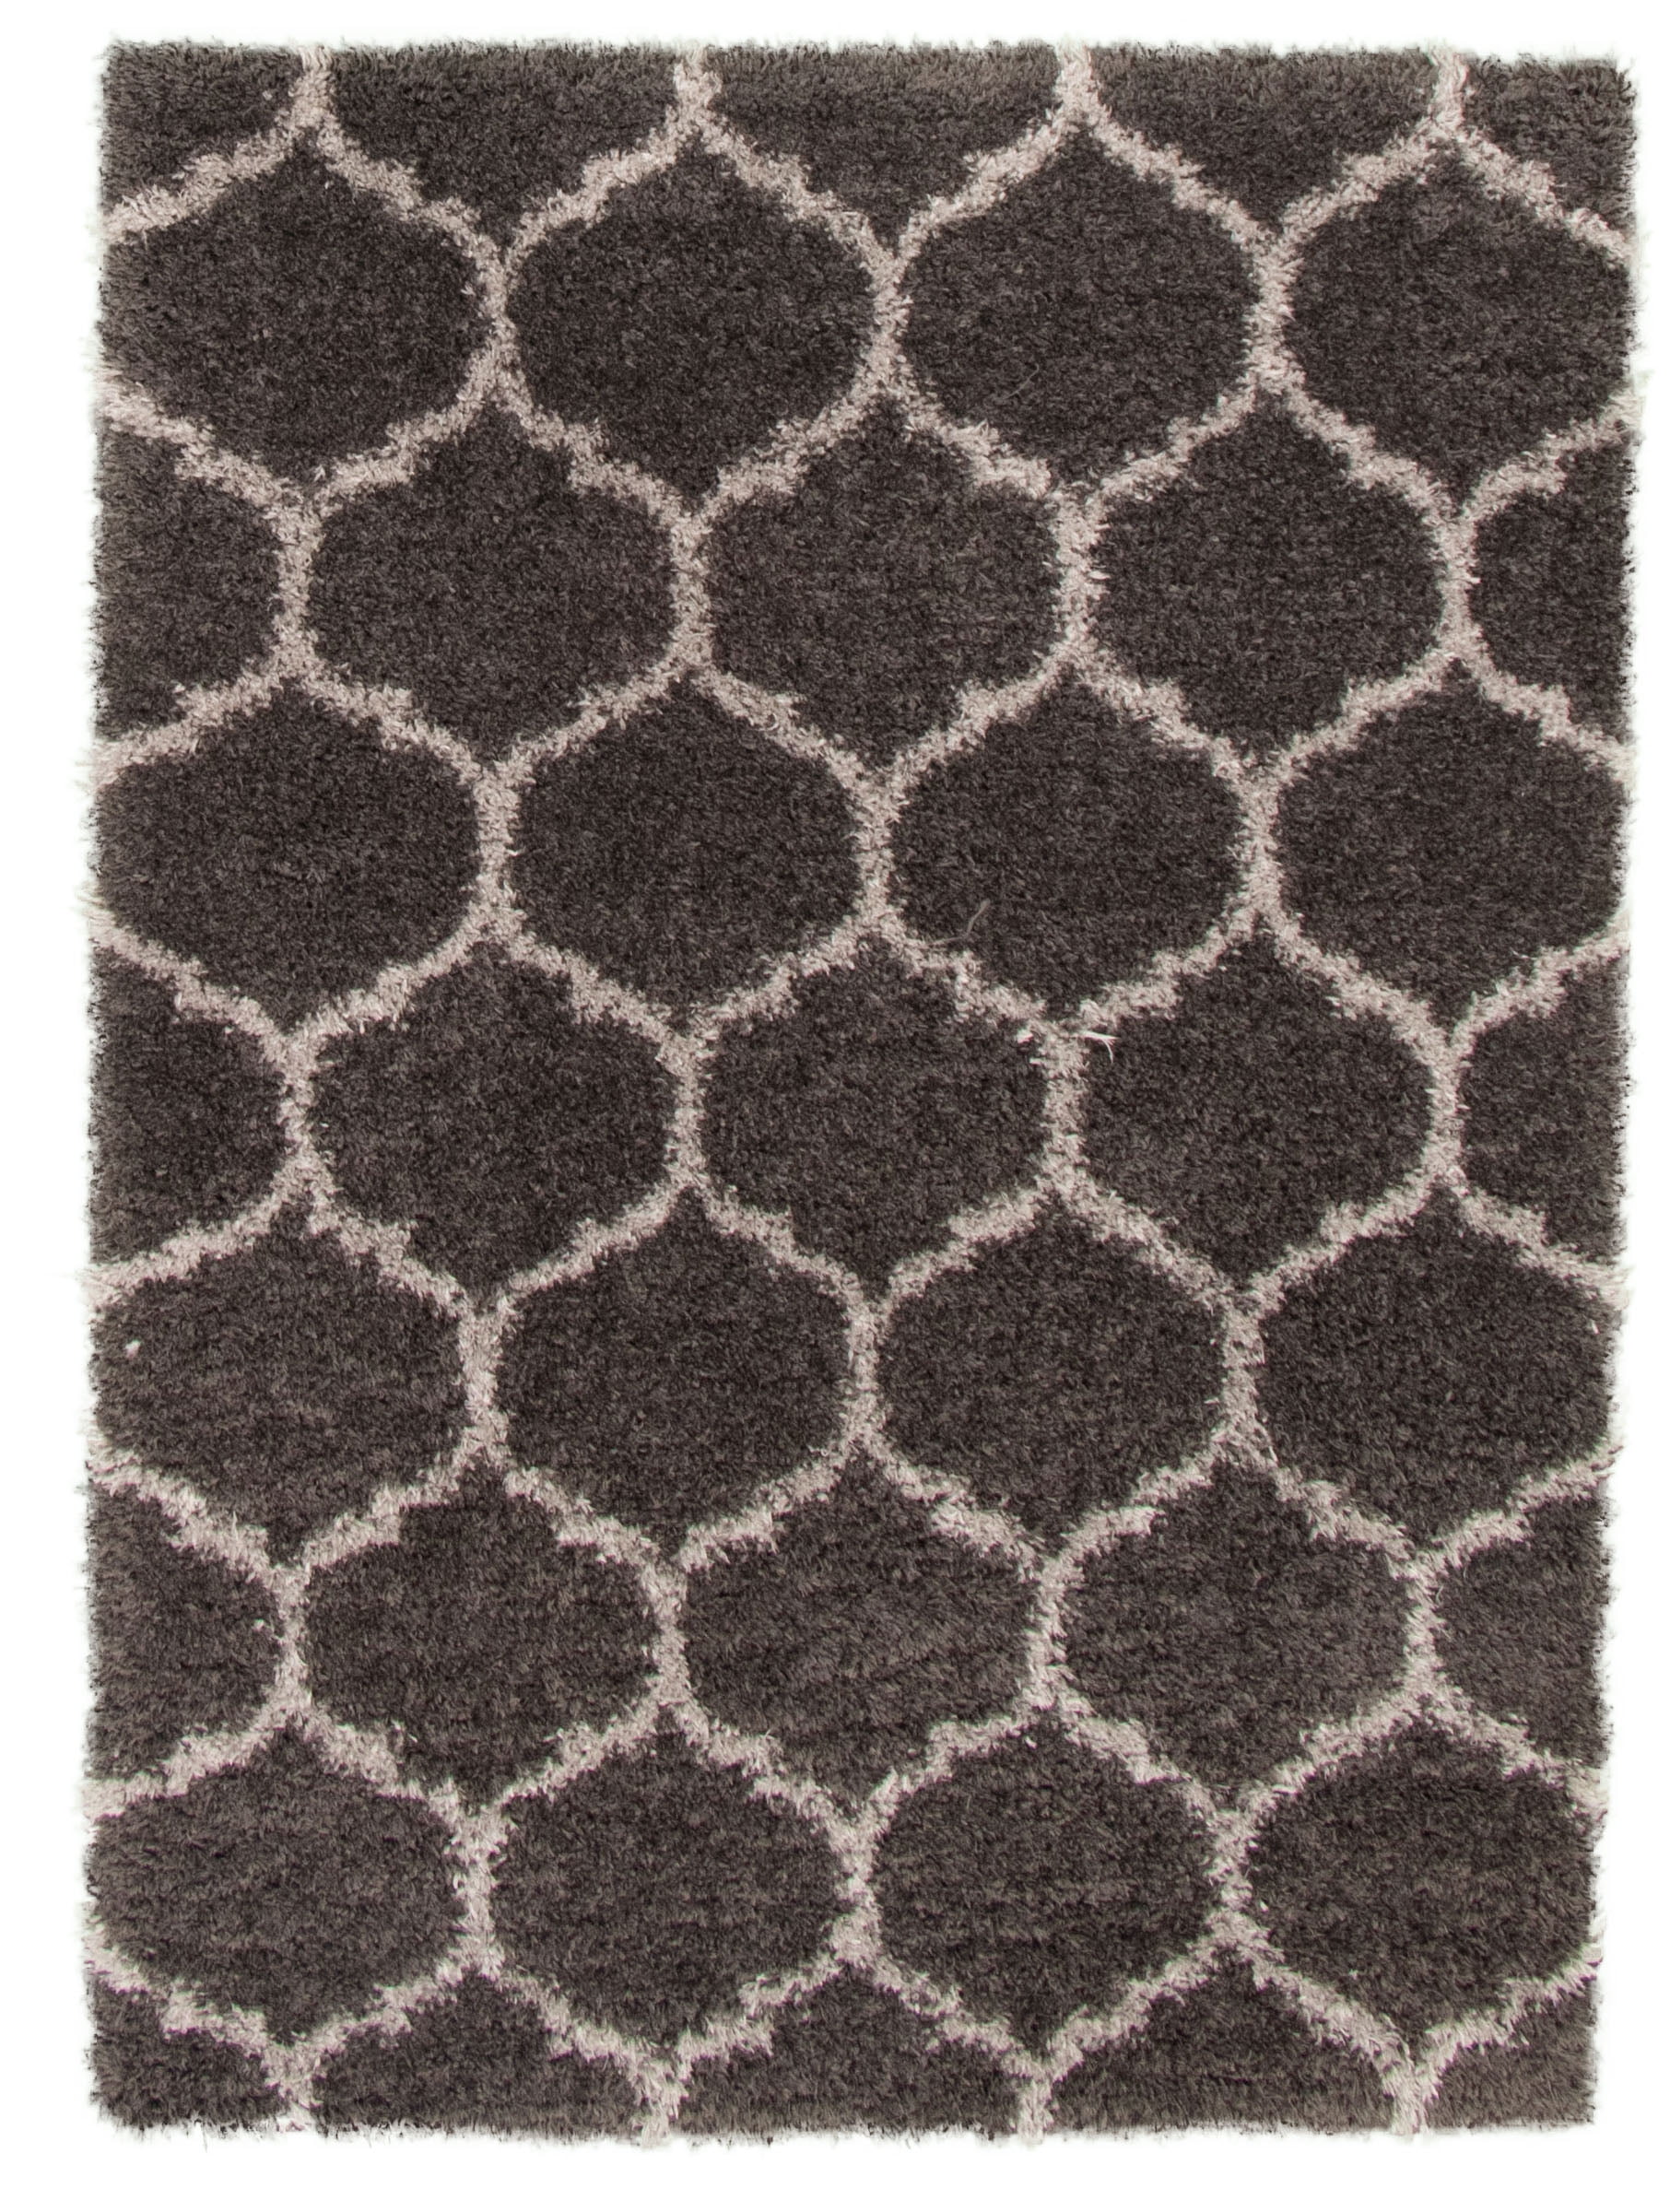 Black Ivory eCarpetGallery Abstract Area Rug 8x10 Zebra Print